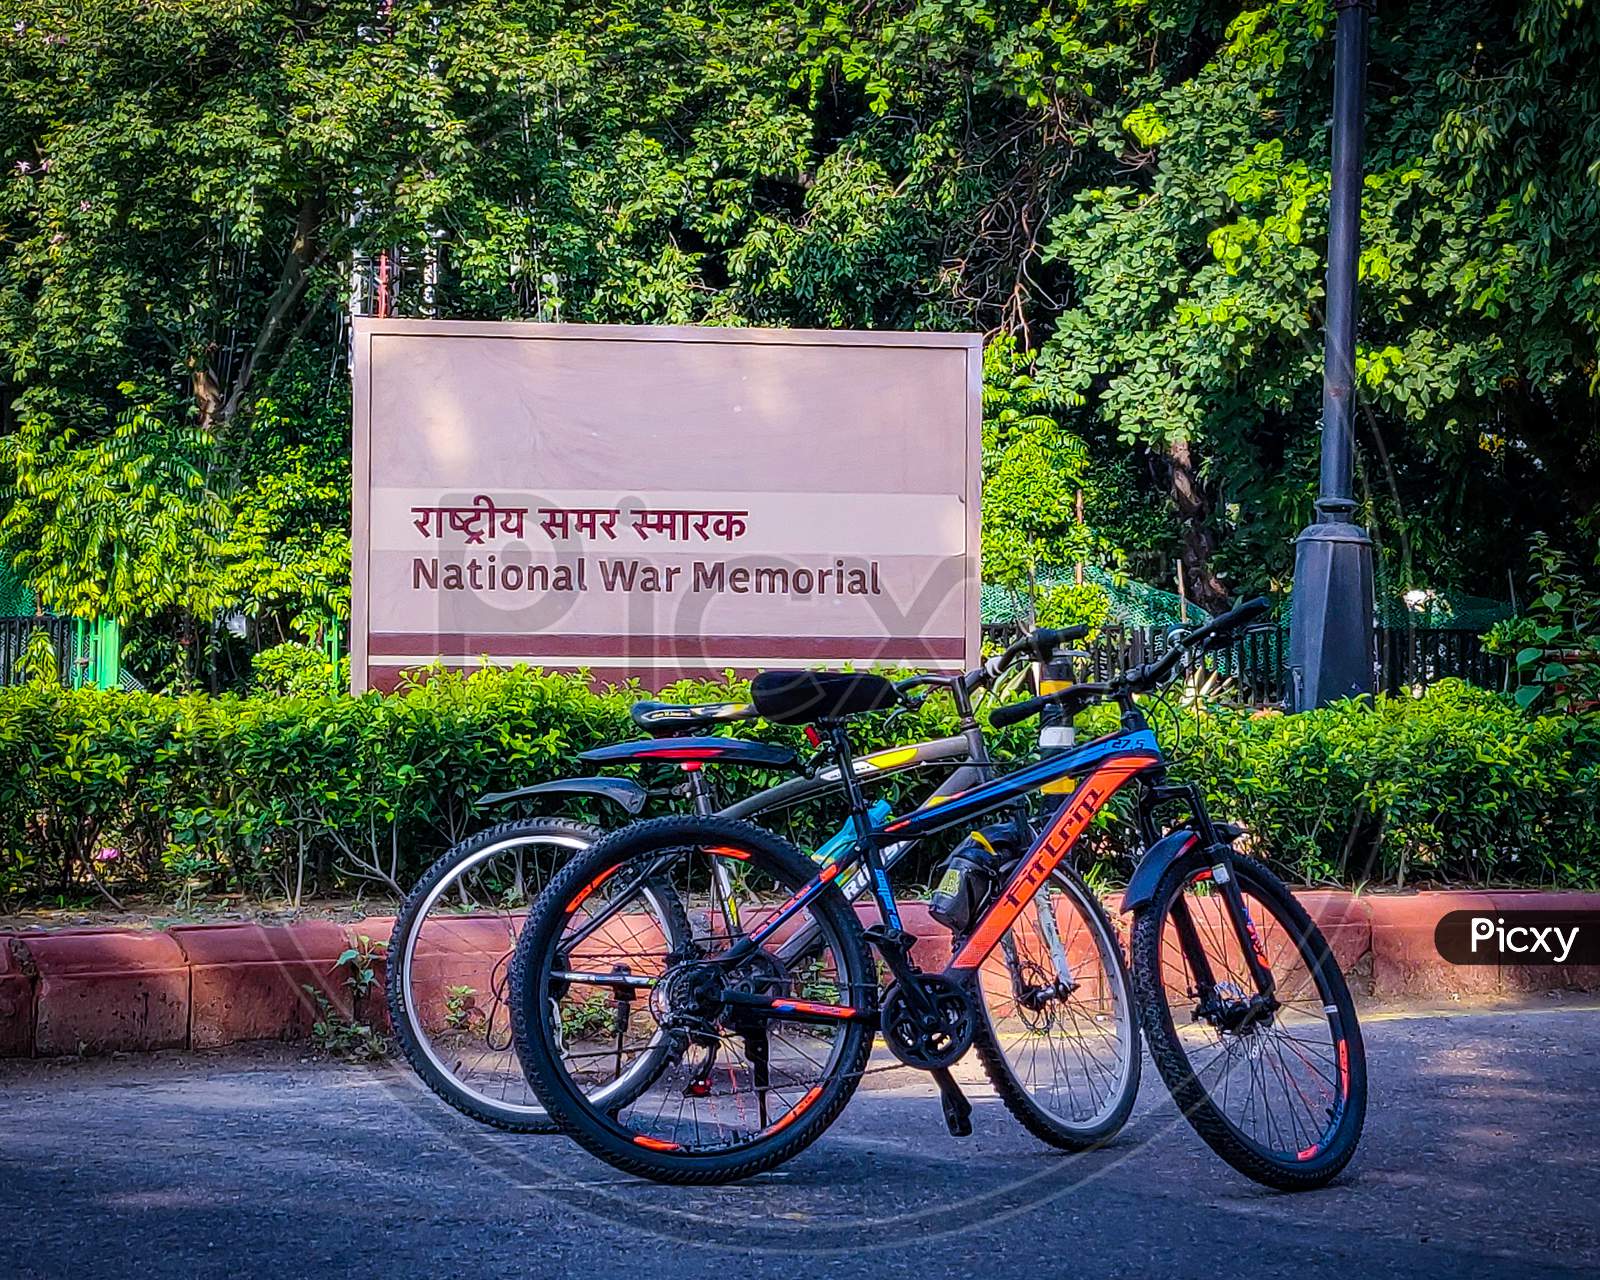 Cycles parked at the National War Memorial, New Delhi, India